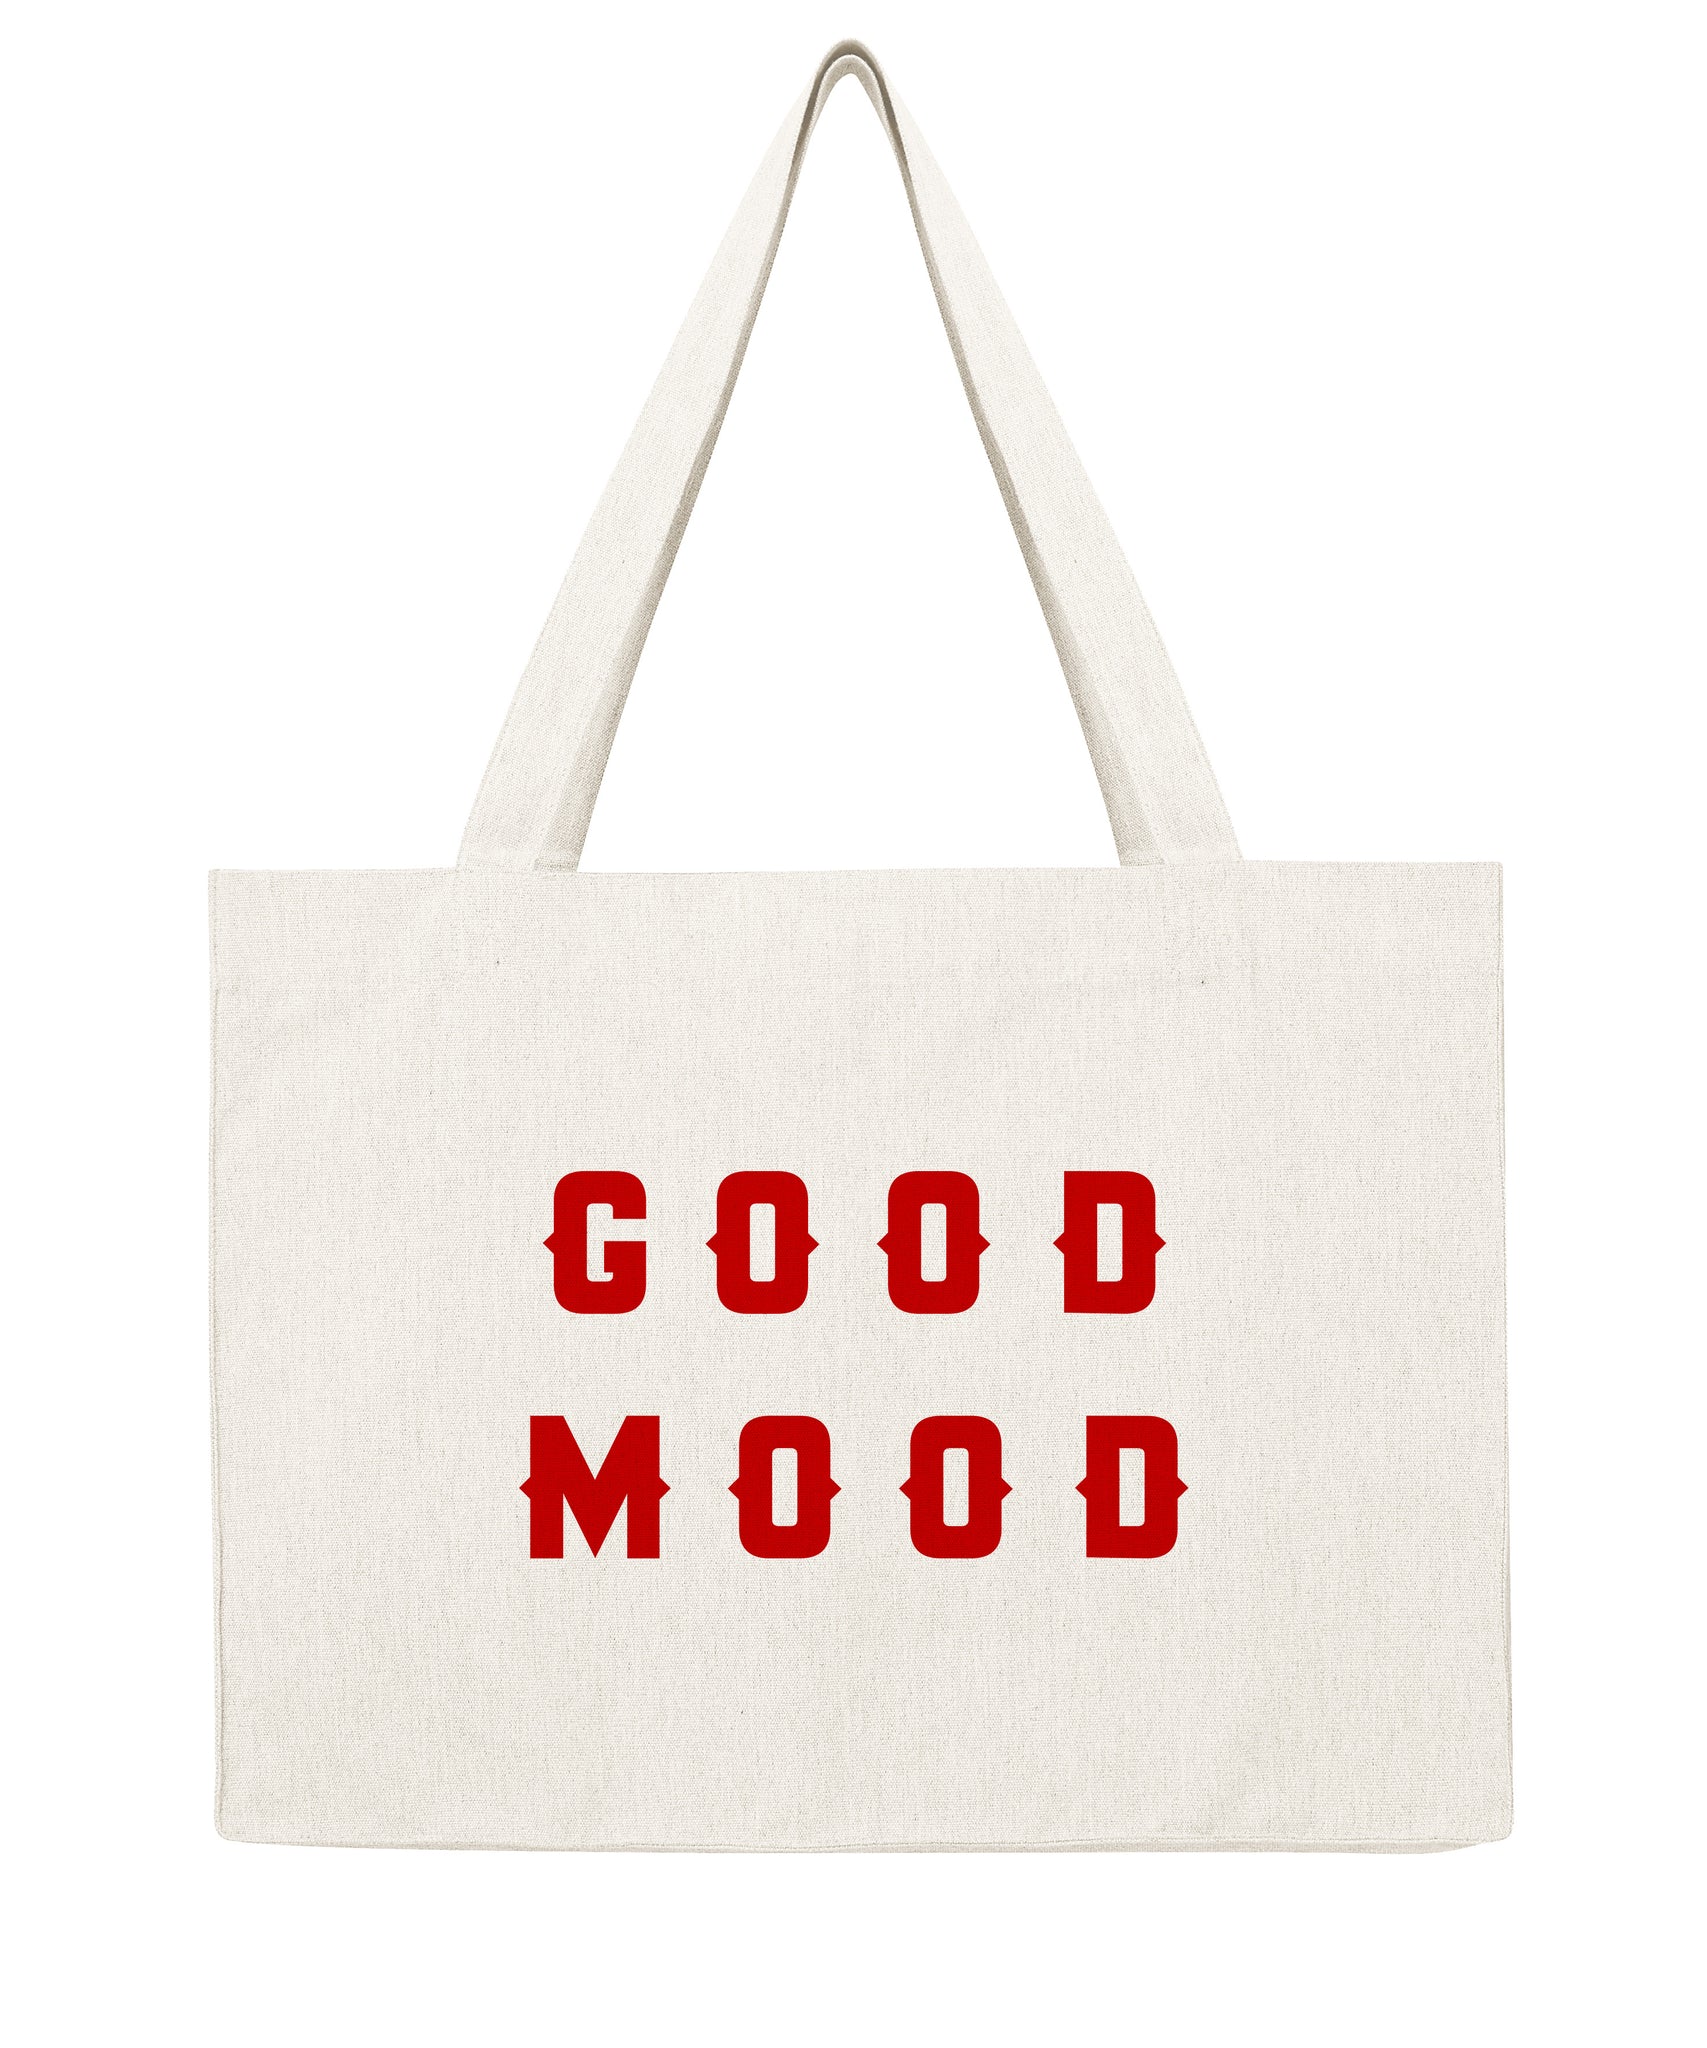 Good Mood - Shopping bag-Sacs-Atelier Amelot